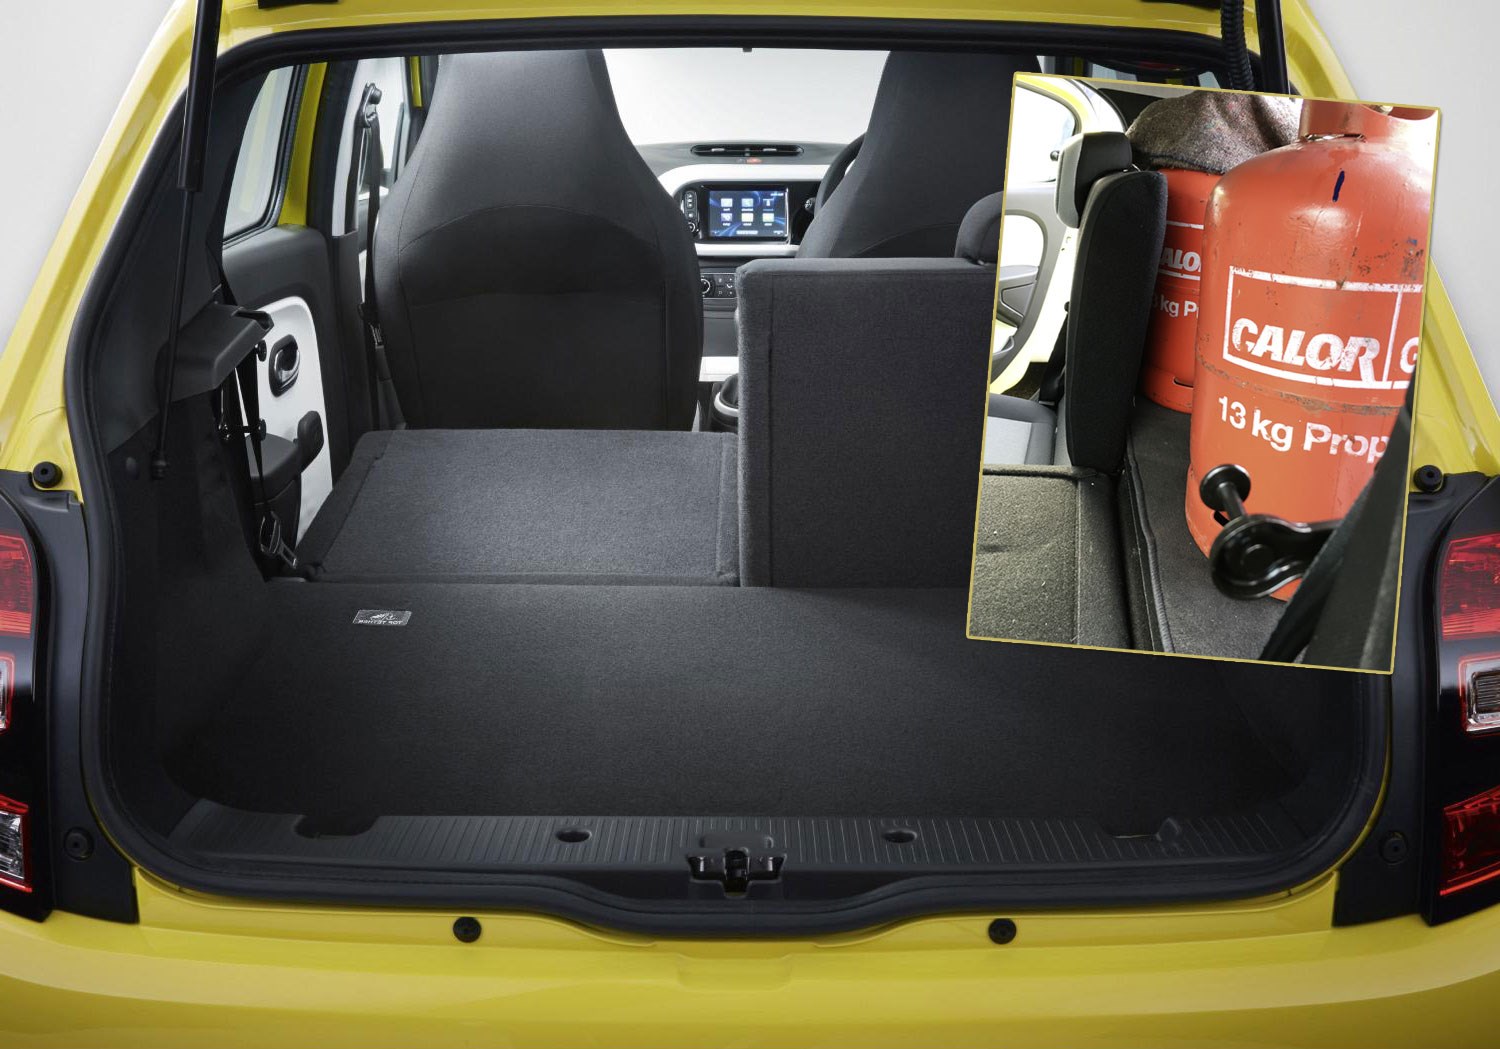 Renault Twingo (2016) long-term test review